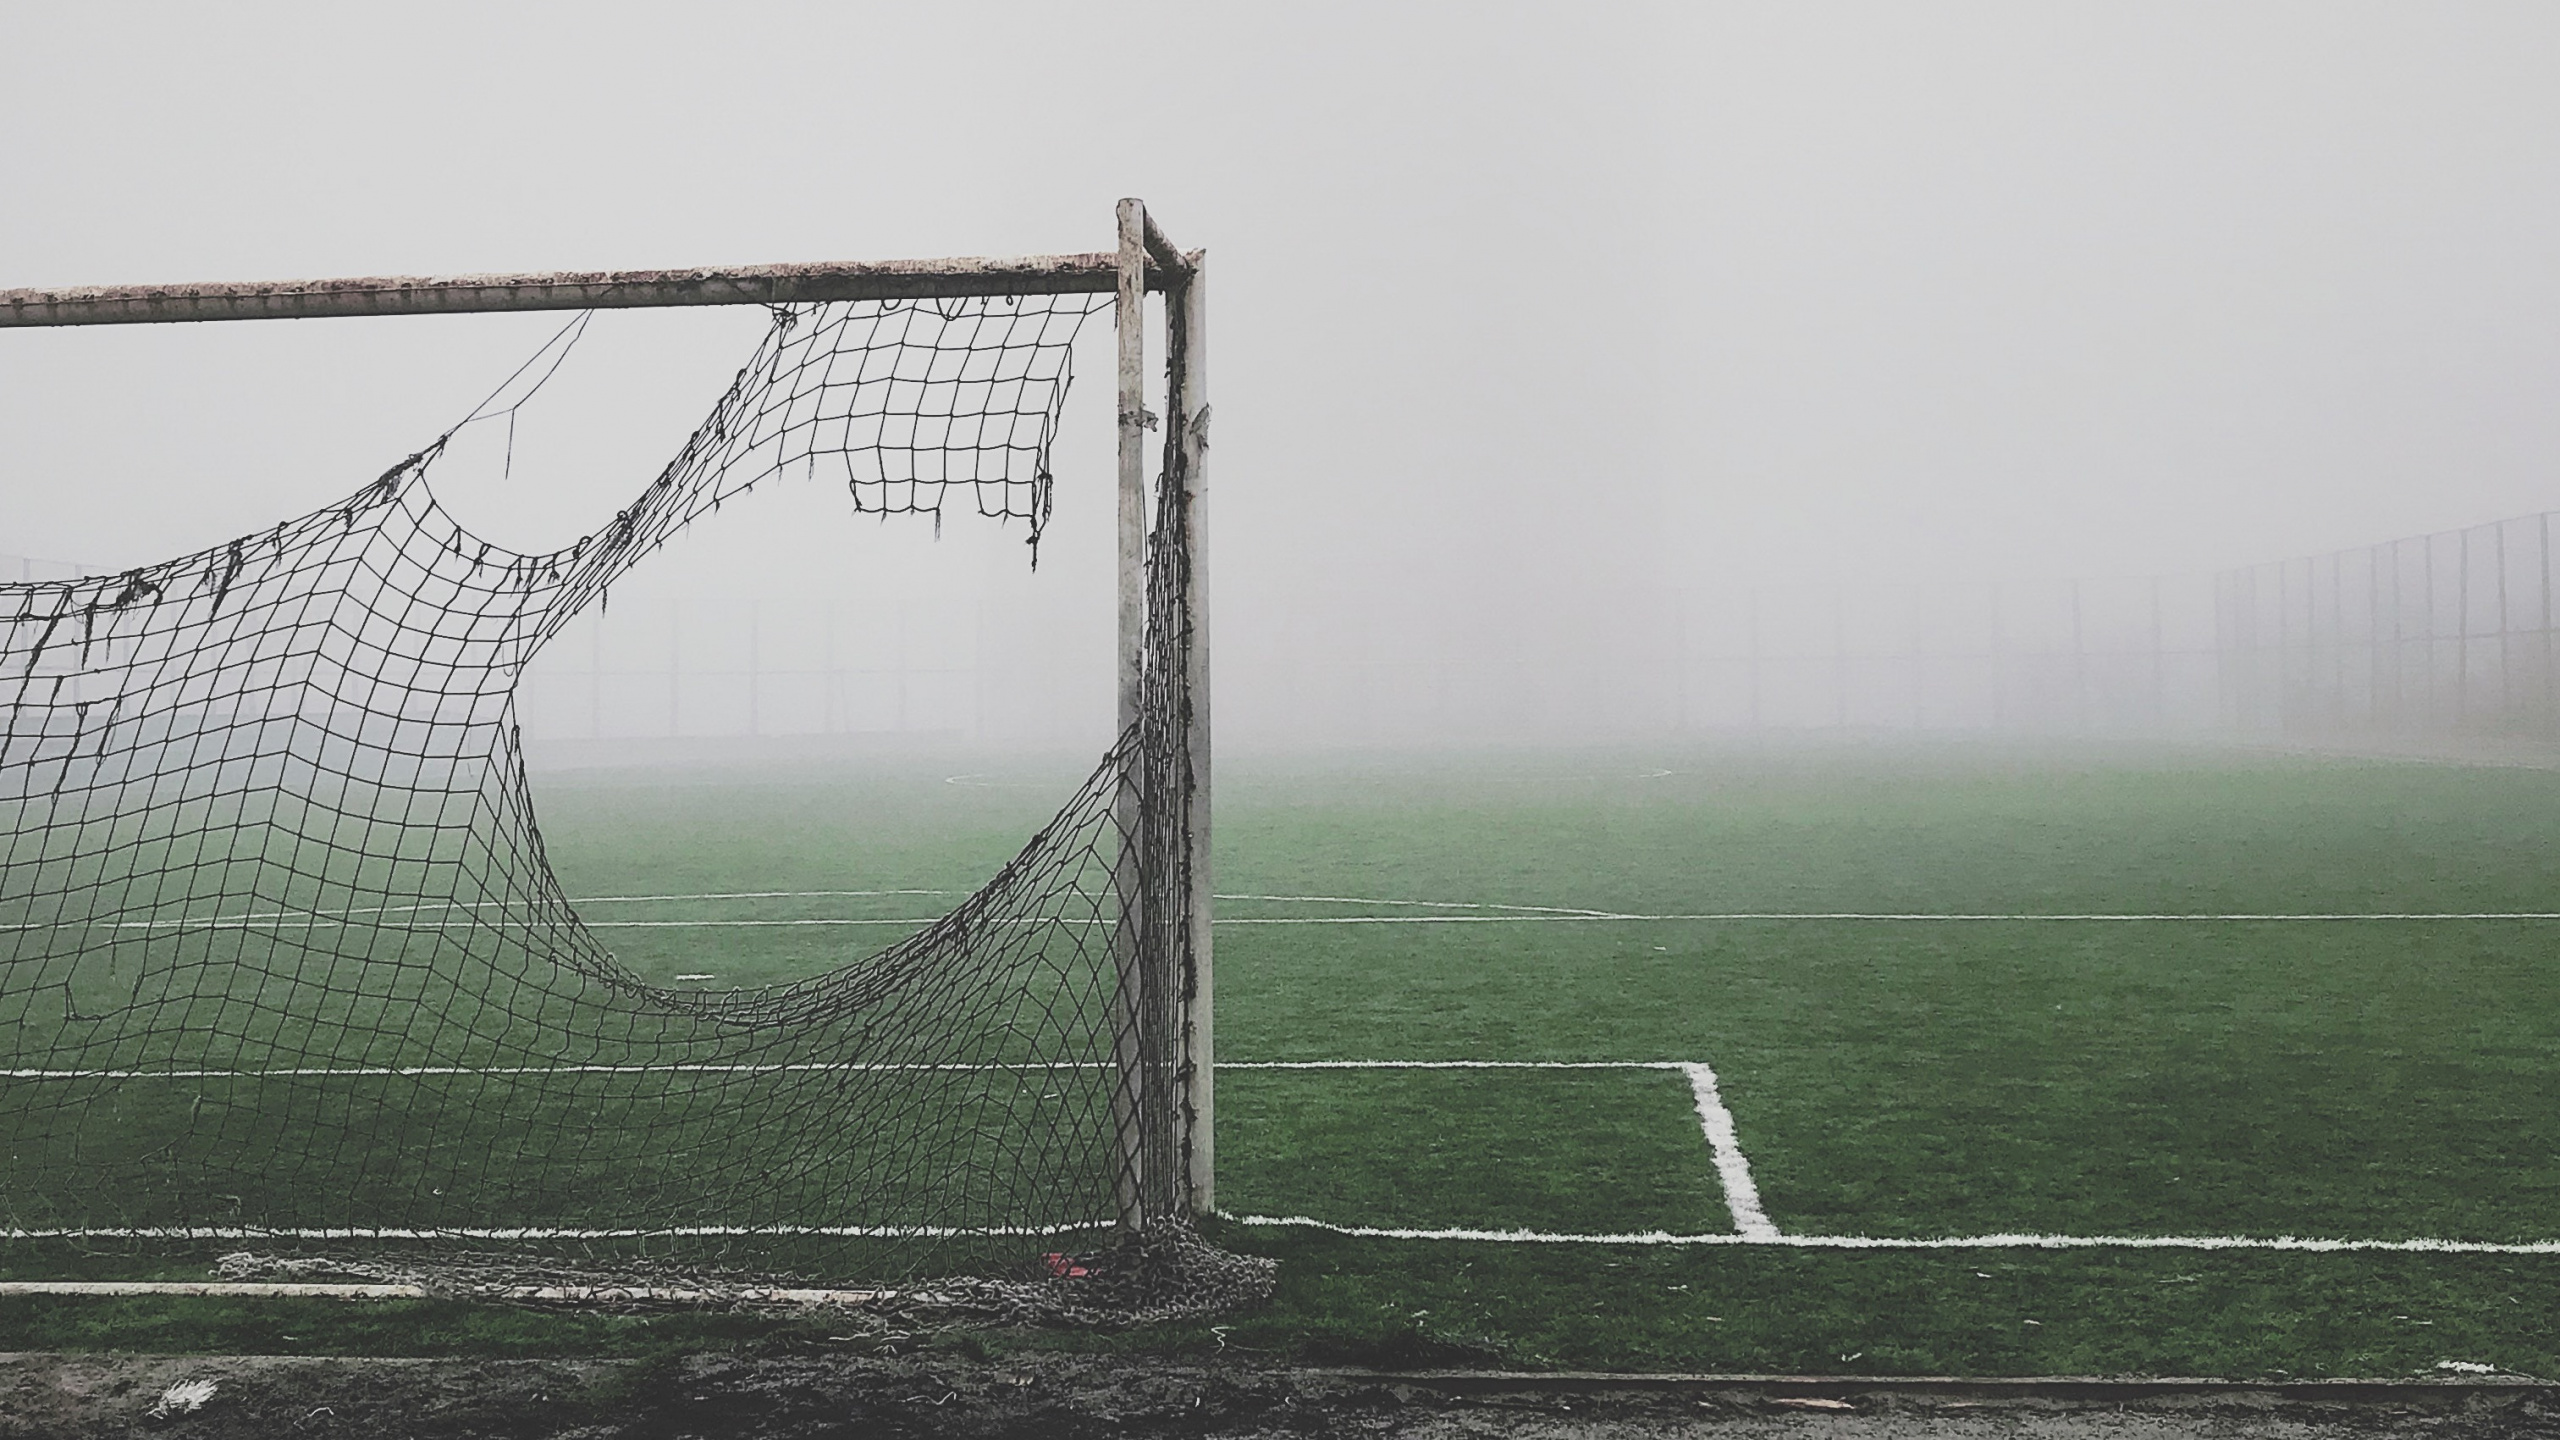 White Soccer Goal Net on Green Grass Field. Wallpaper in 2560x1440 Resolution